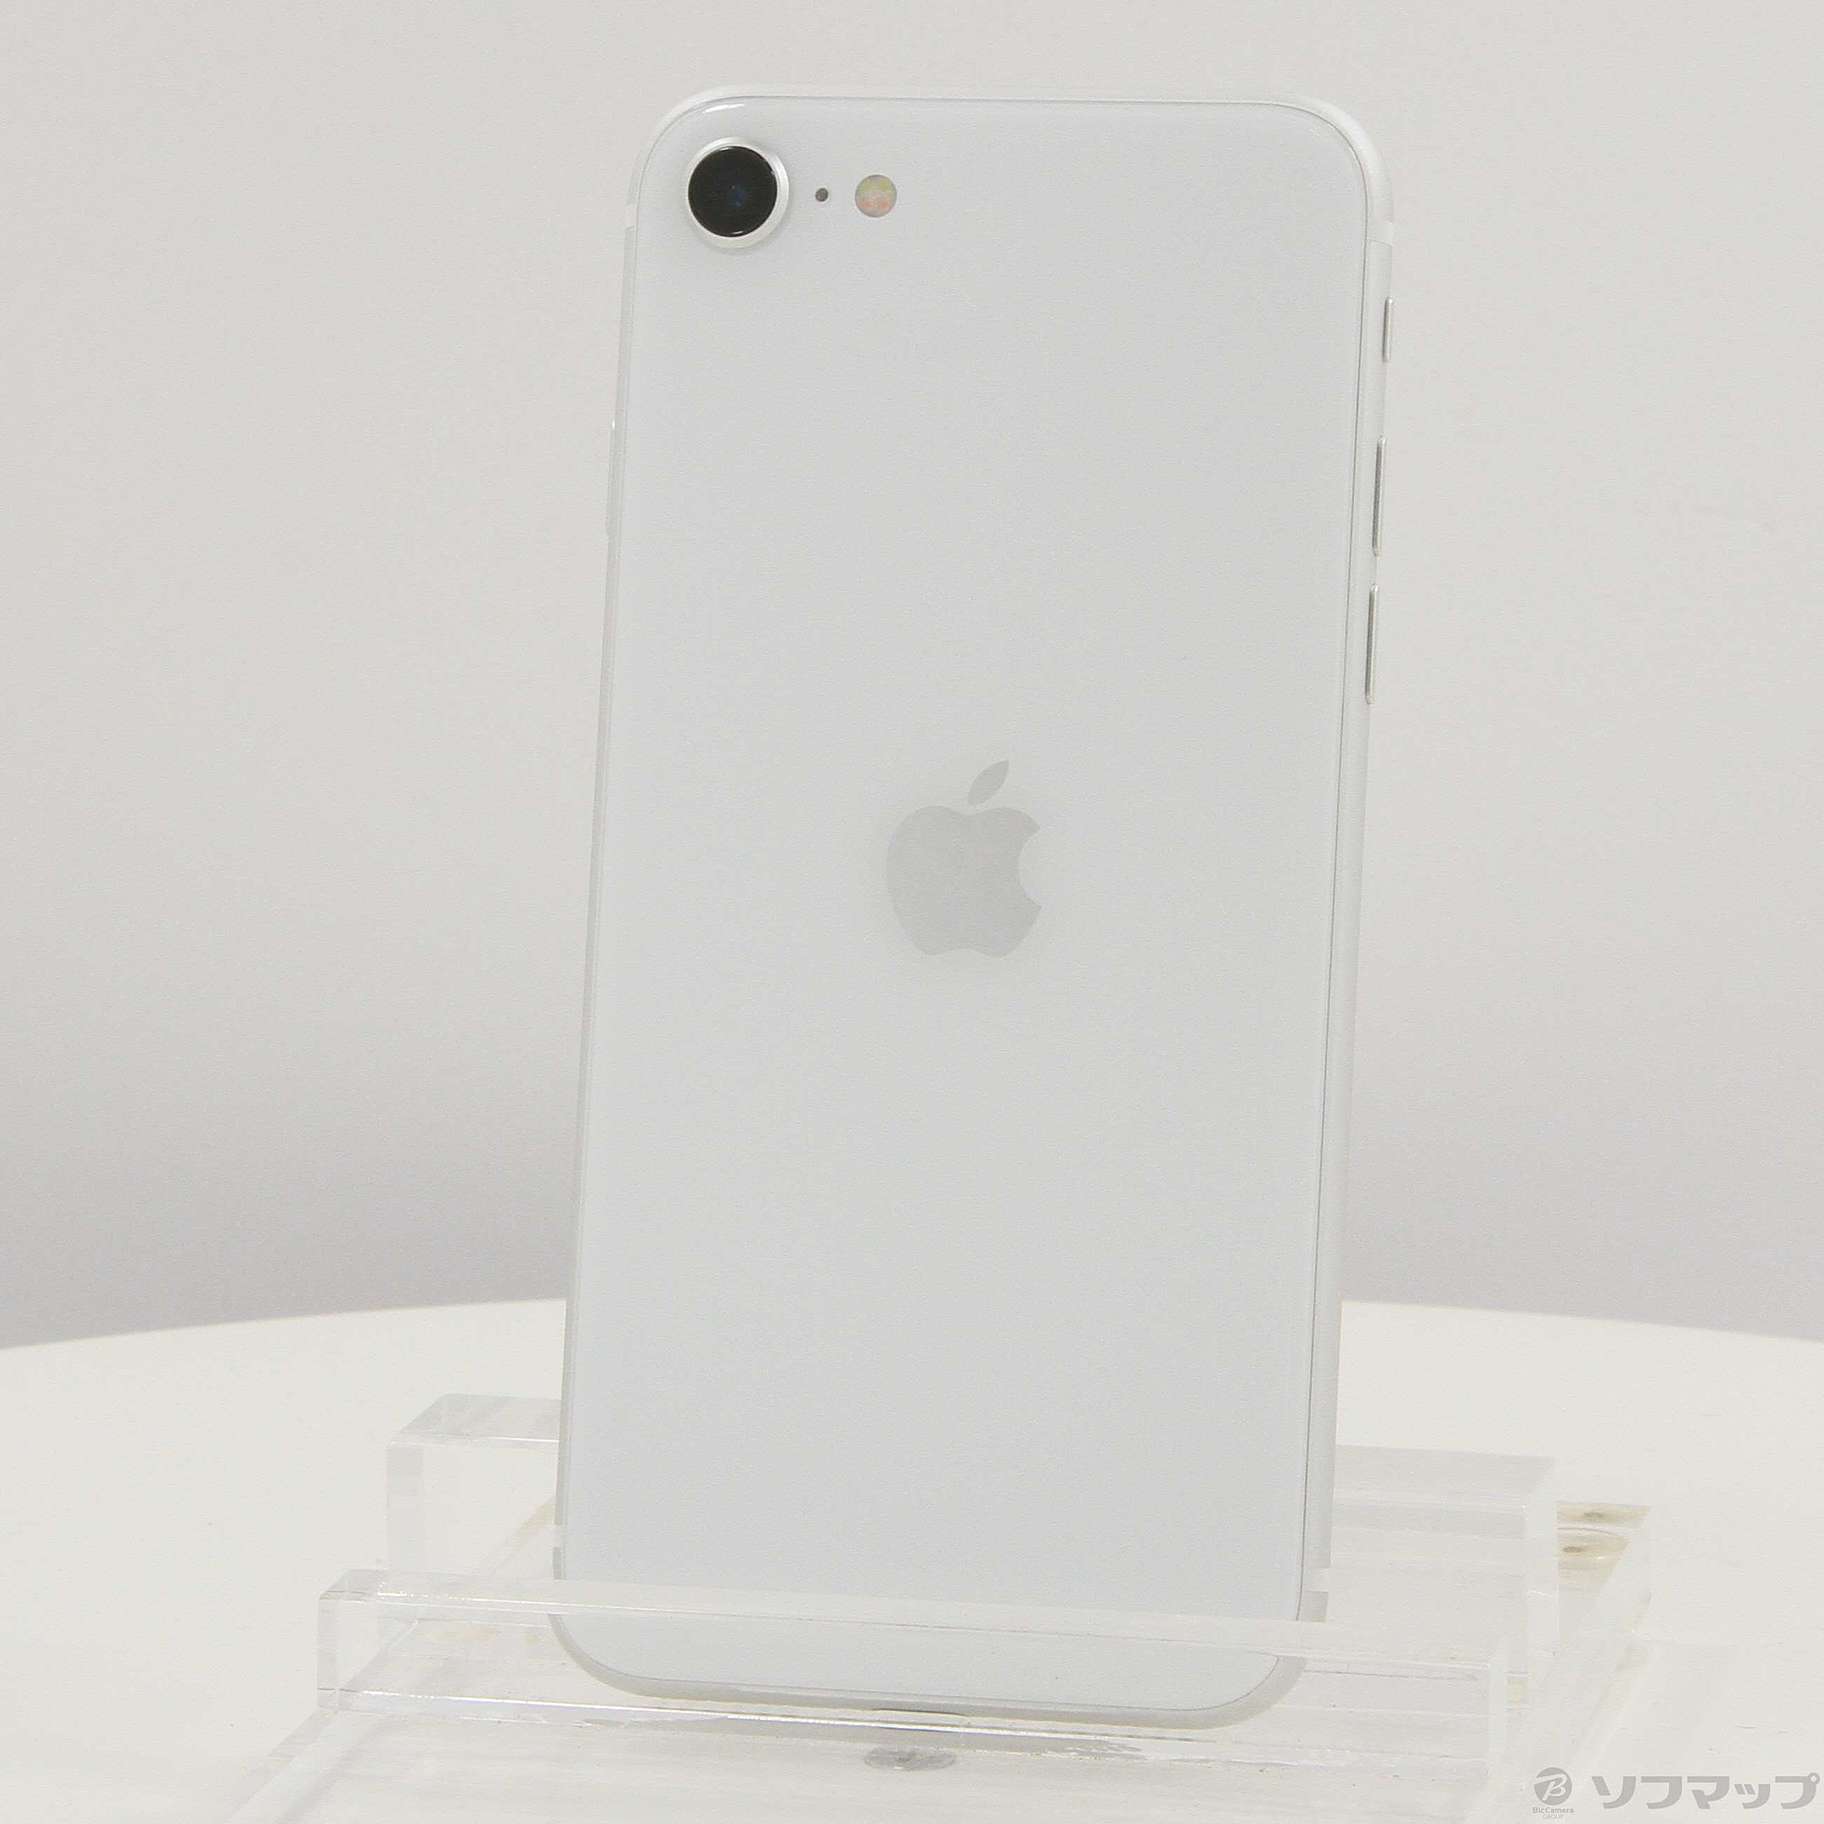 iPhone SE 第2世代 White 128GB